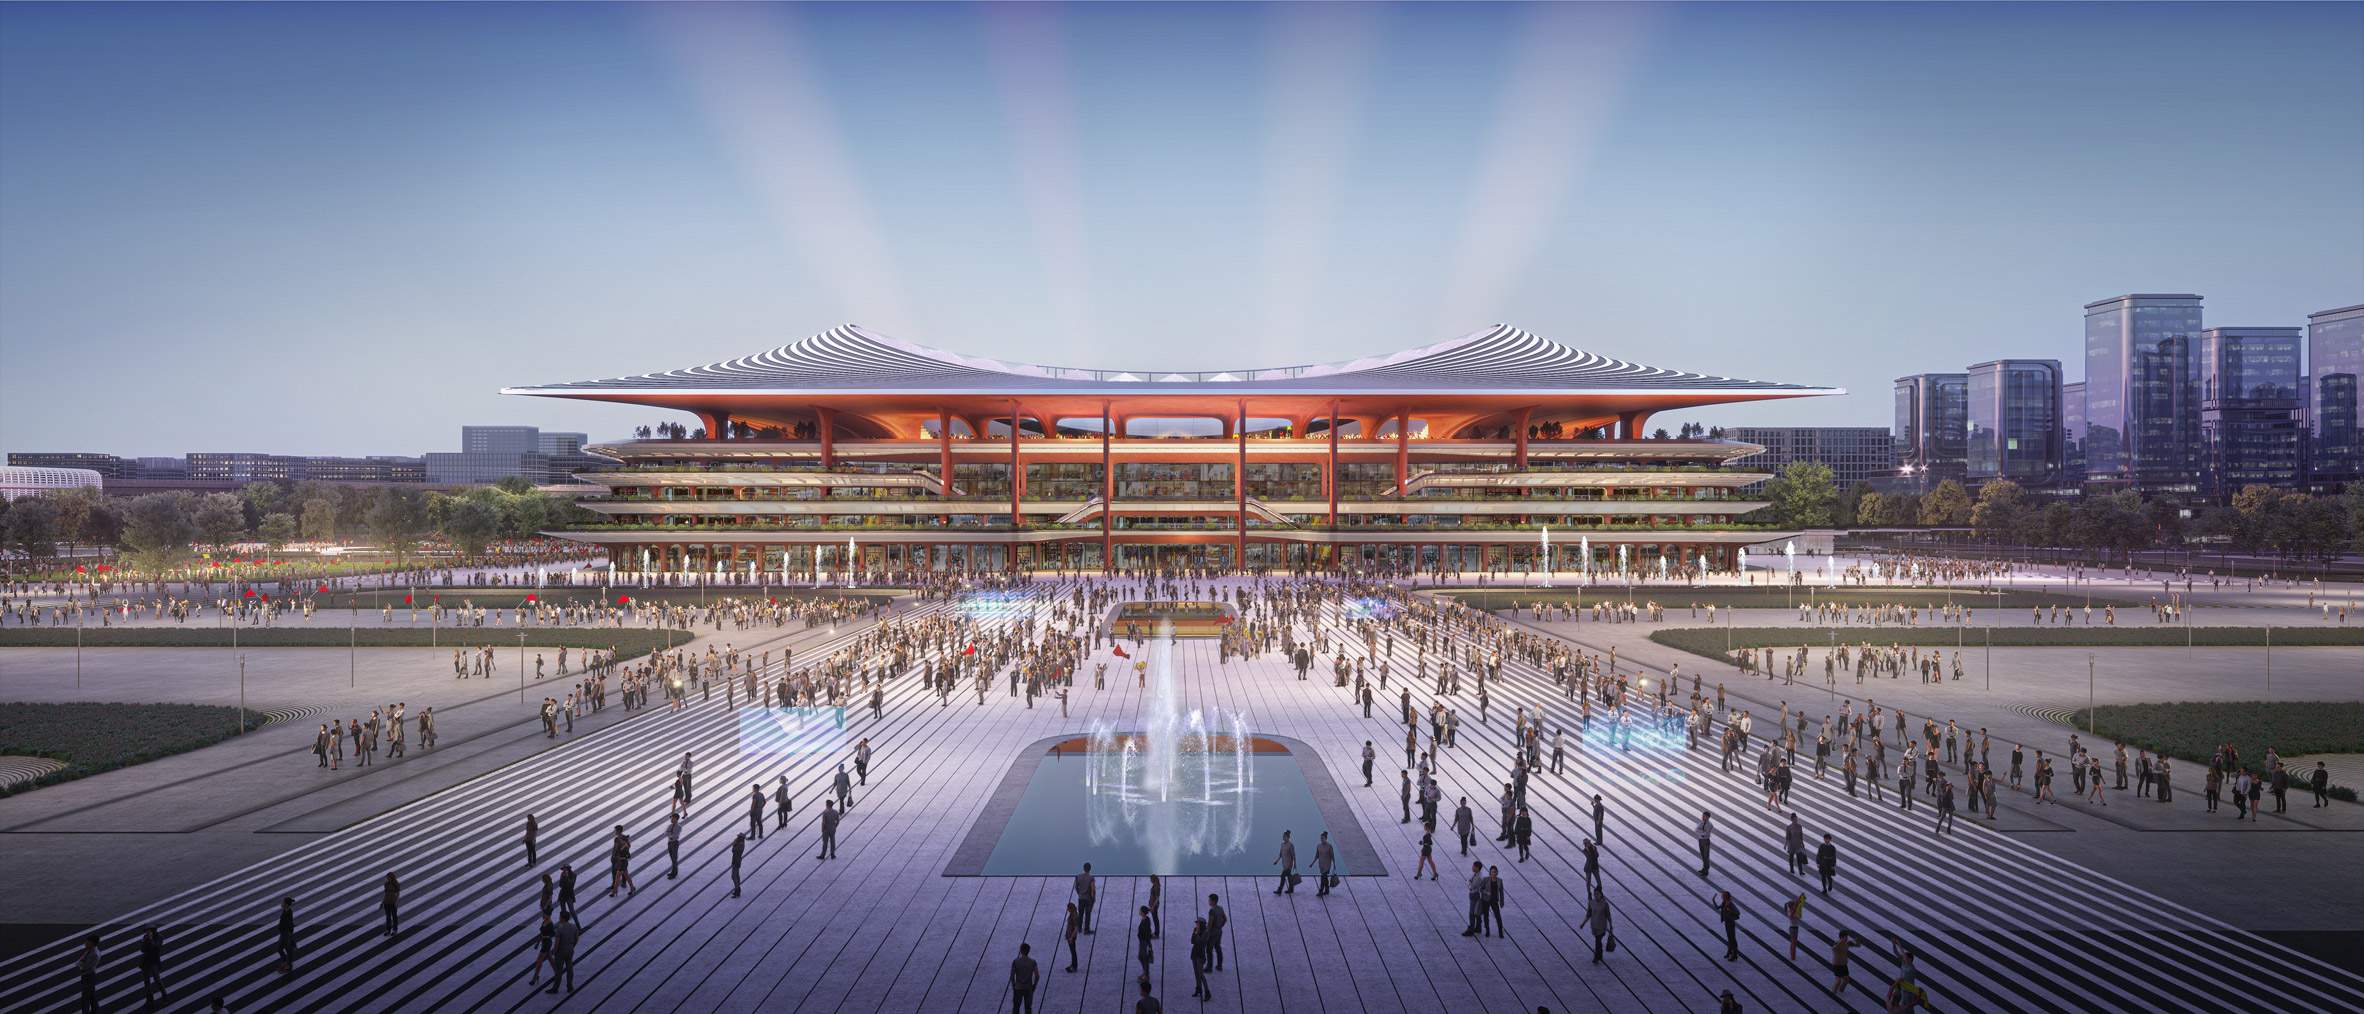 Xi'an International Football Centre stadium proposal by Zaha Hadid Architects in China